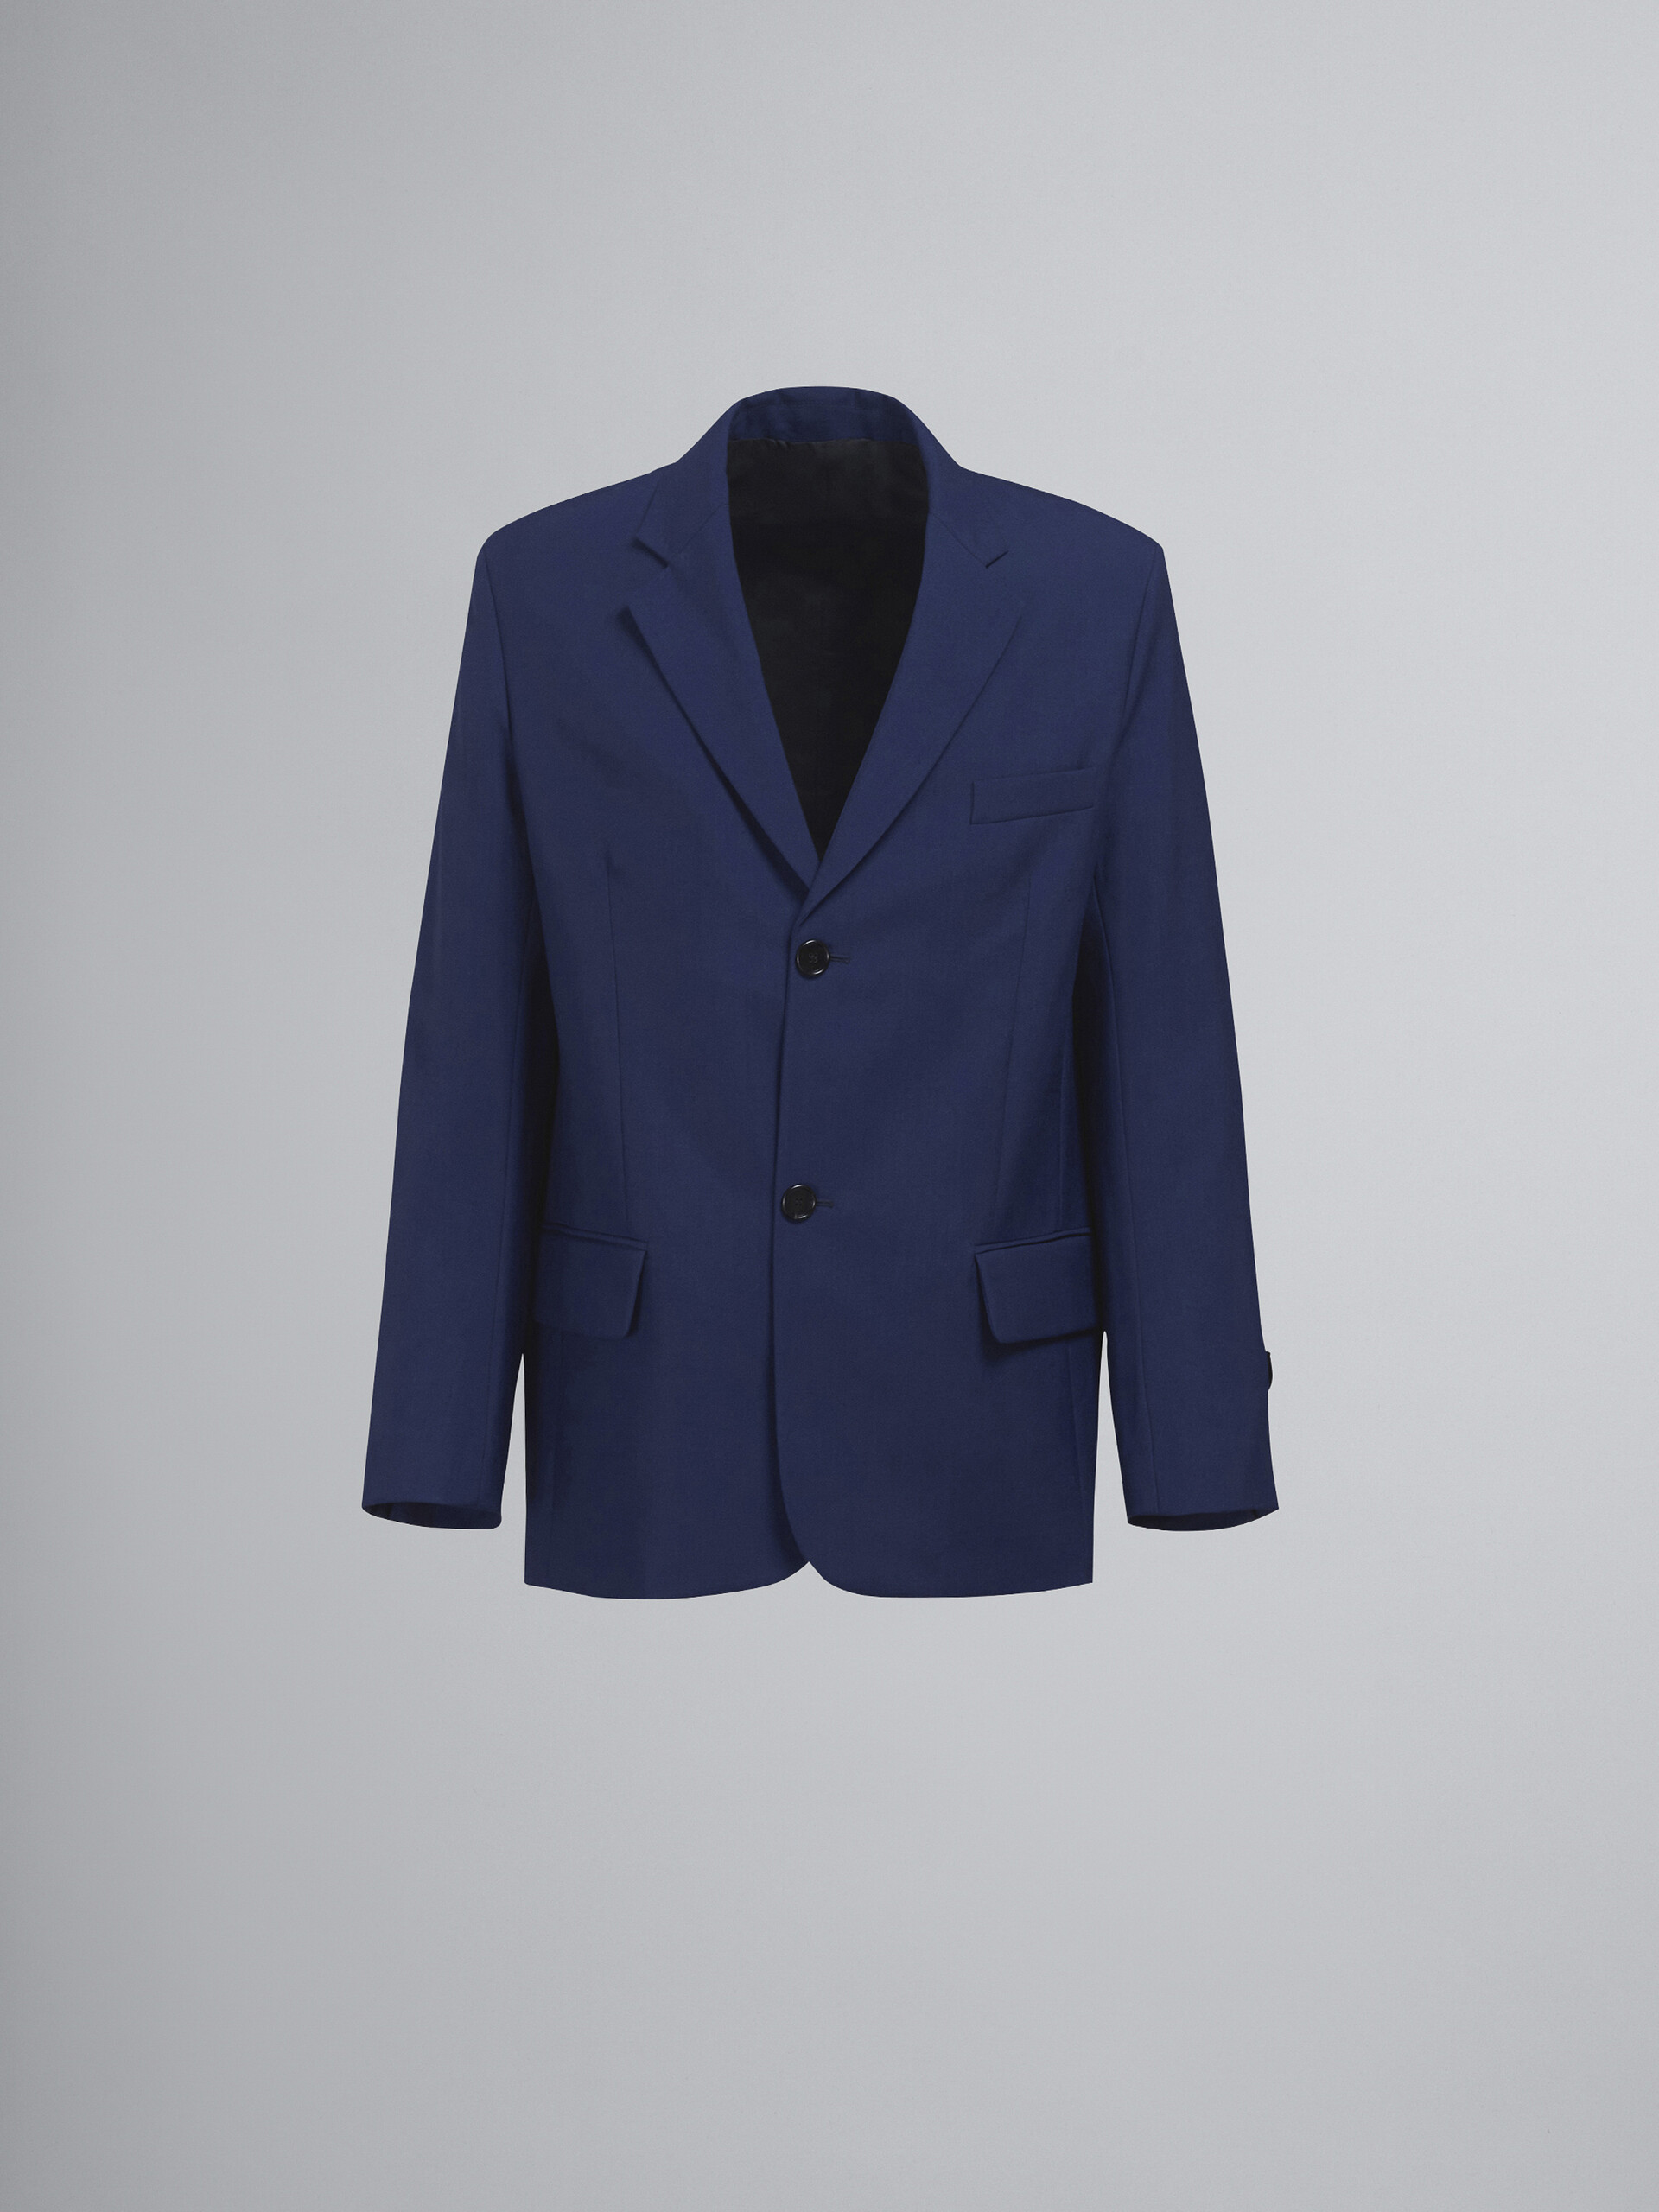 Tropical wool blazer - Jackets - Image 1